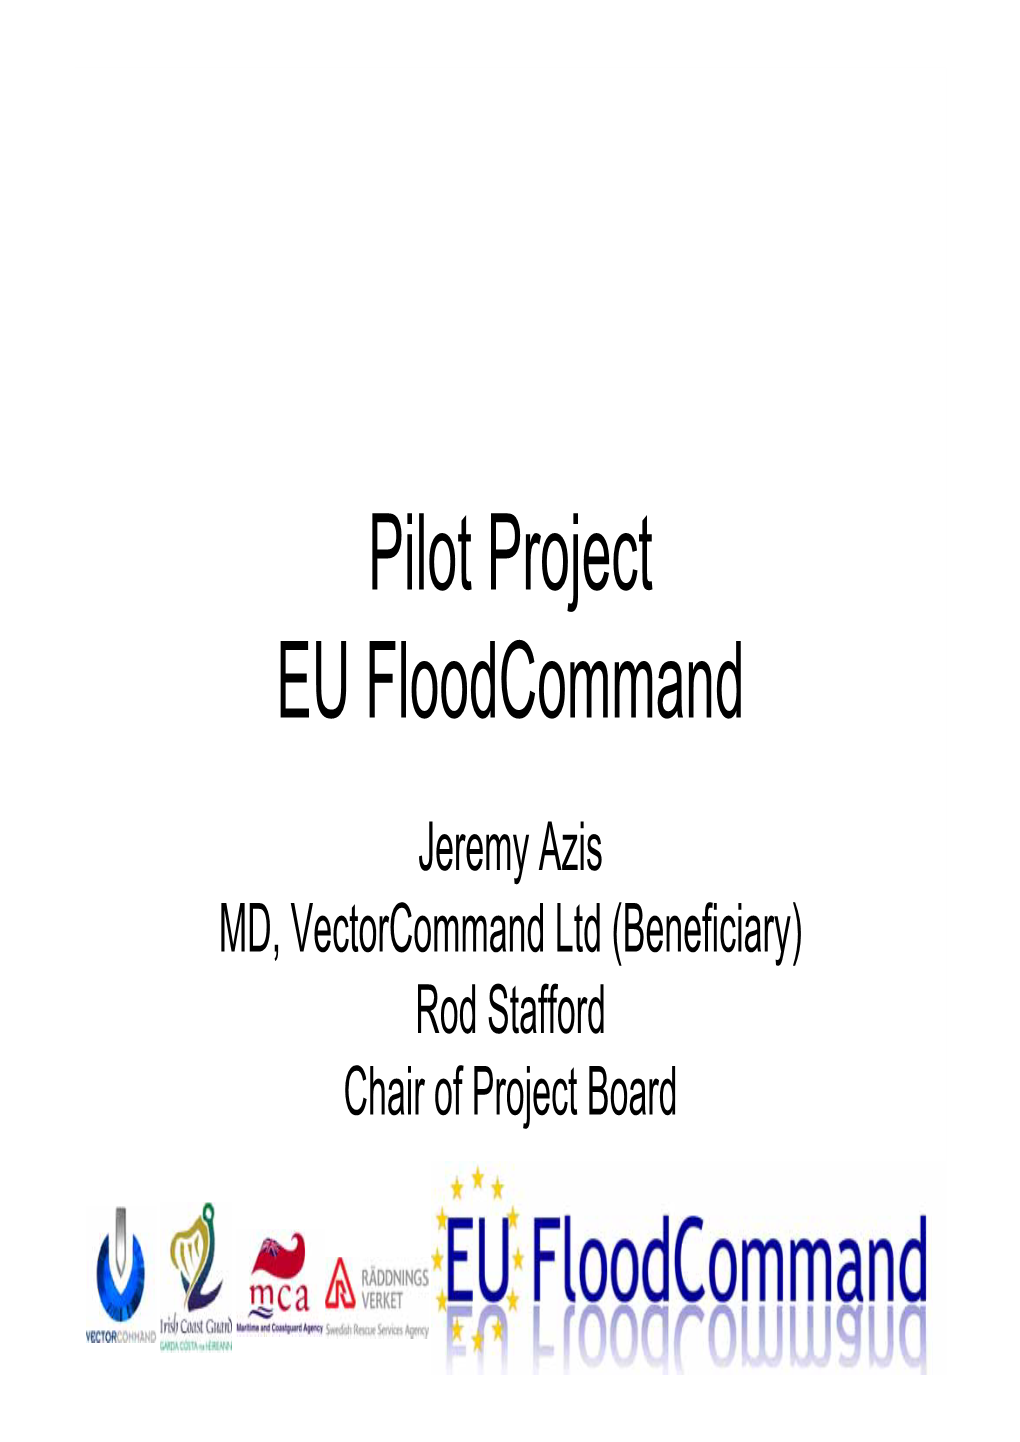 Pilot Project EU Floodcommand